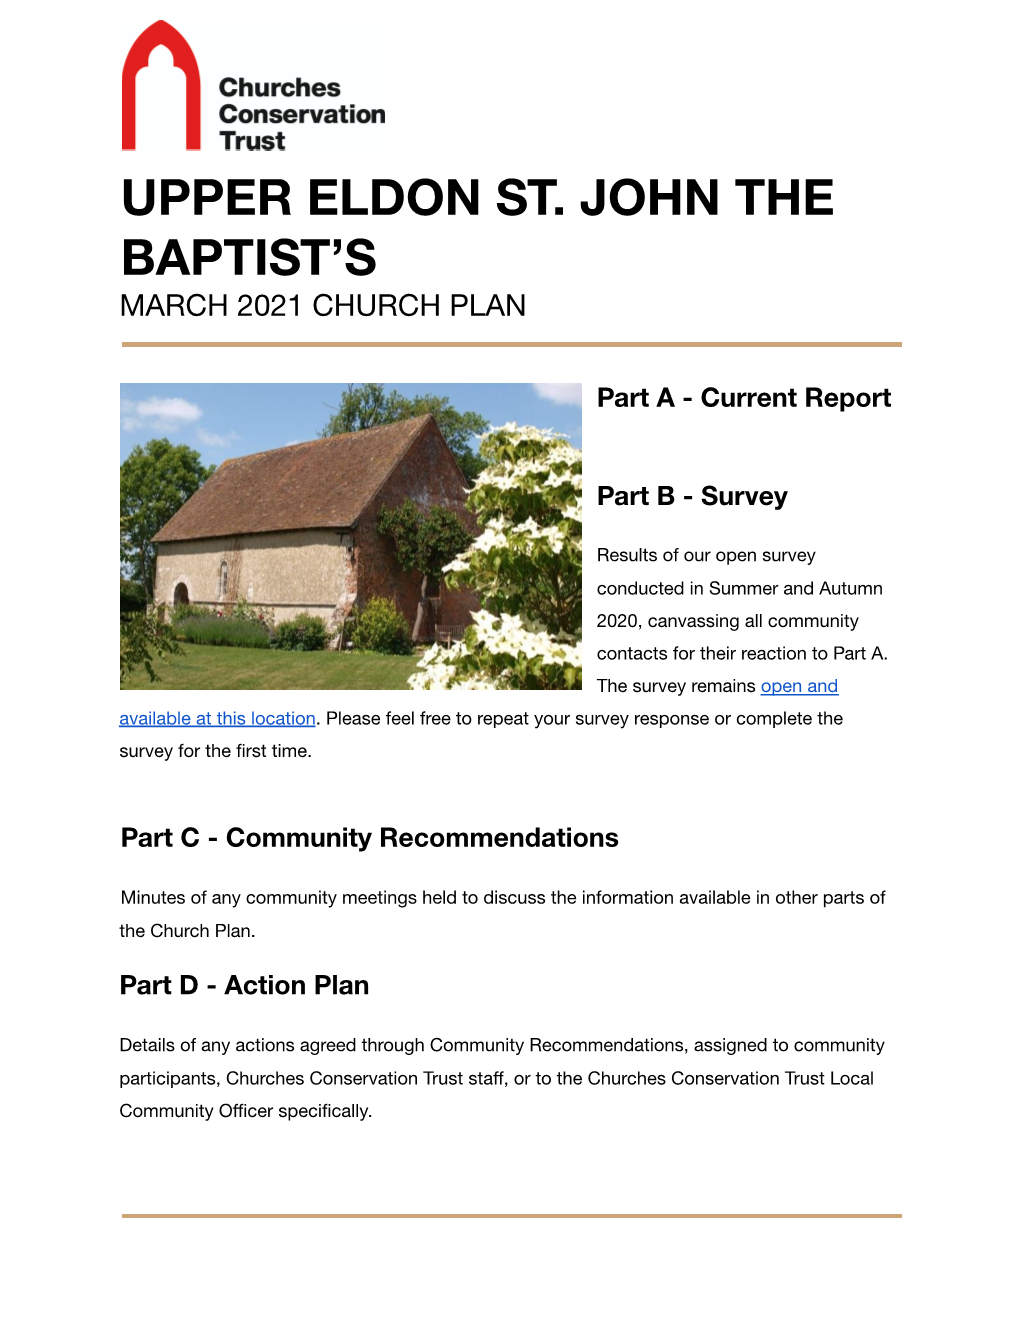 Upper Eldon Church Plan